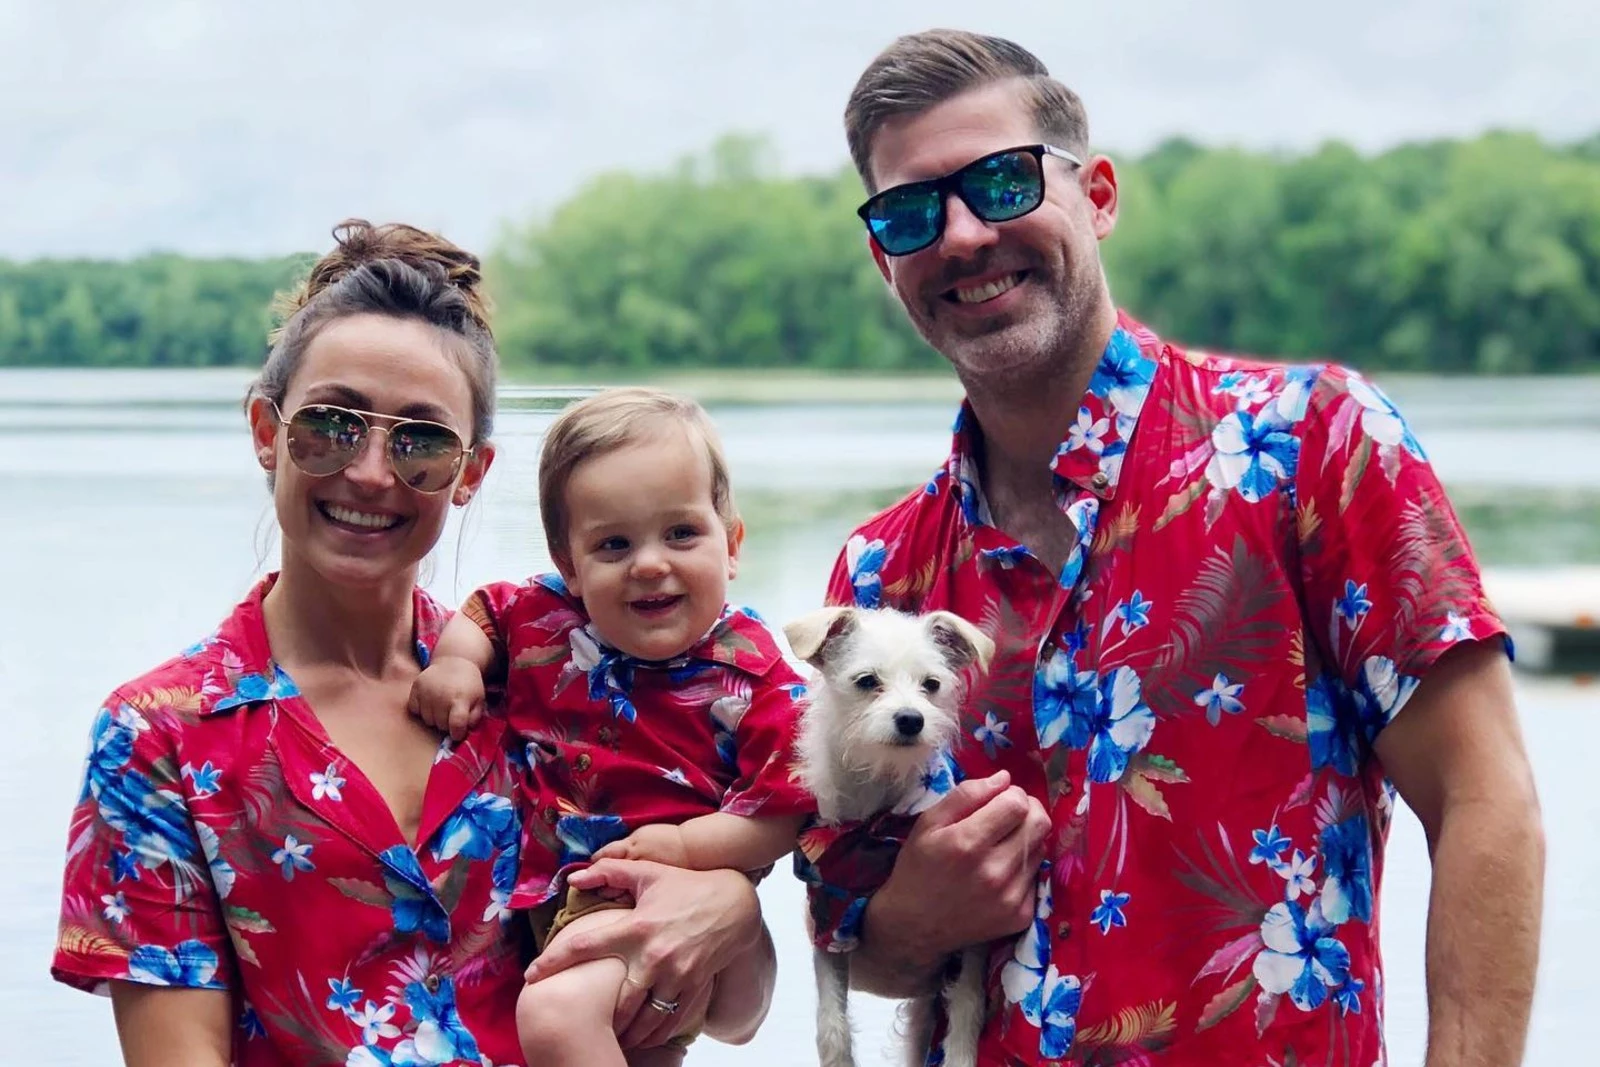 dog and human matching shirts